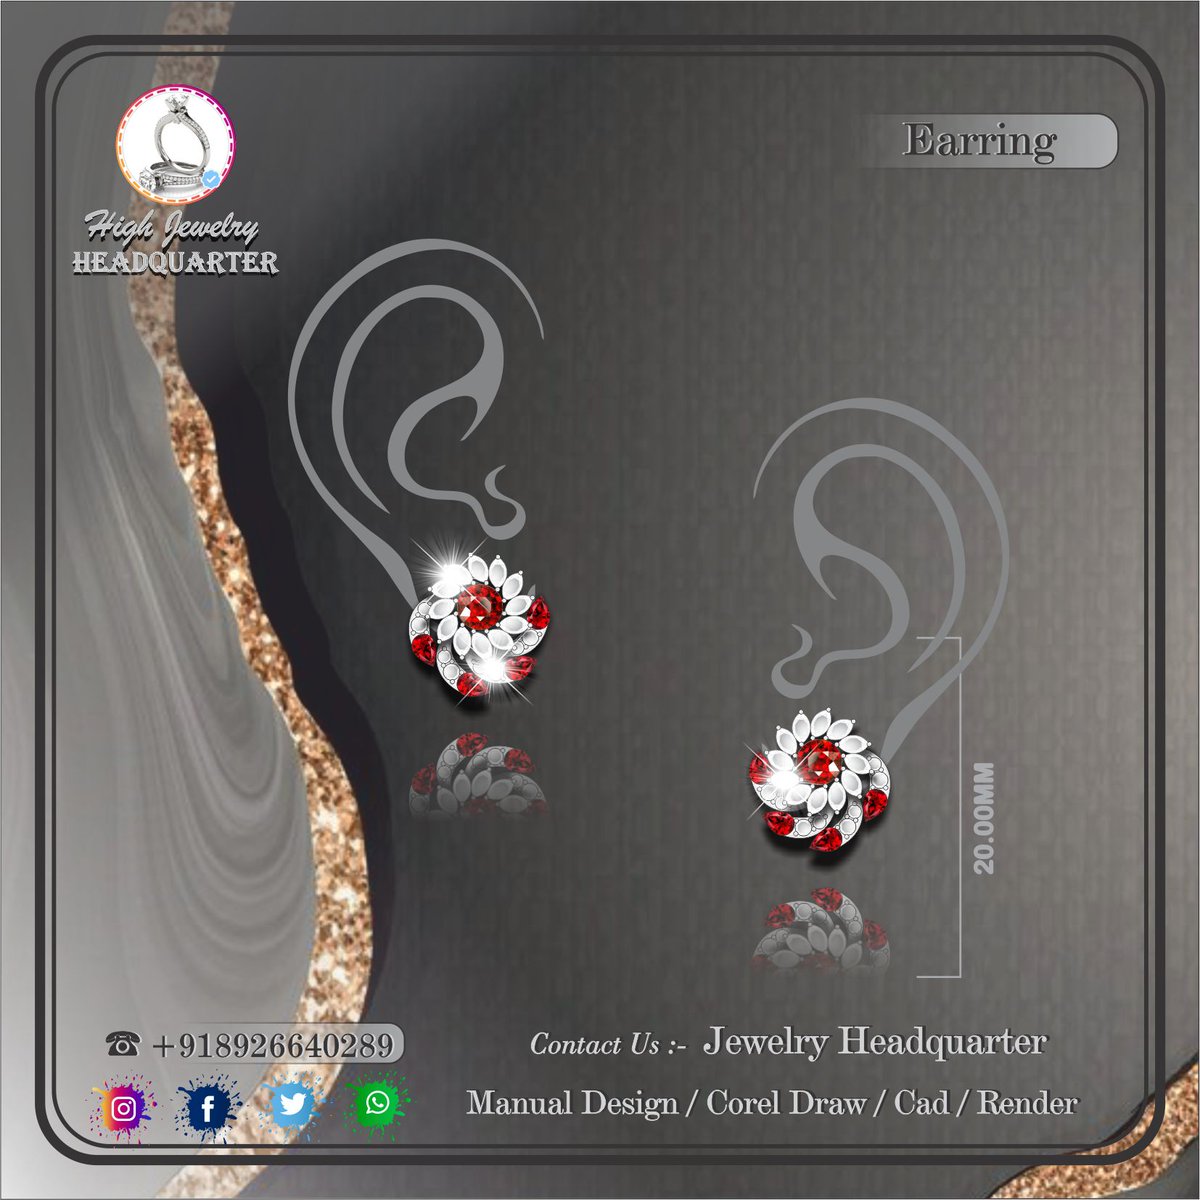 @Jewelry_Headquarter (Call +91 8926640289)

#jwellery #jewelry #jewels #jewellerydesign #jewellerydesigner #earring #earrings #nift #gia #retail #diamond